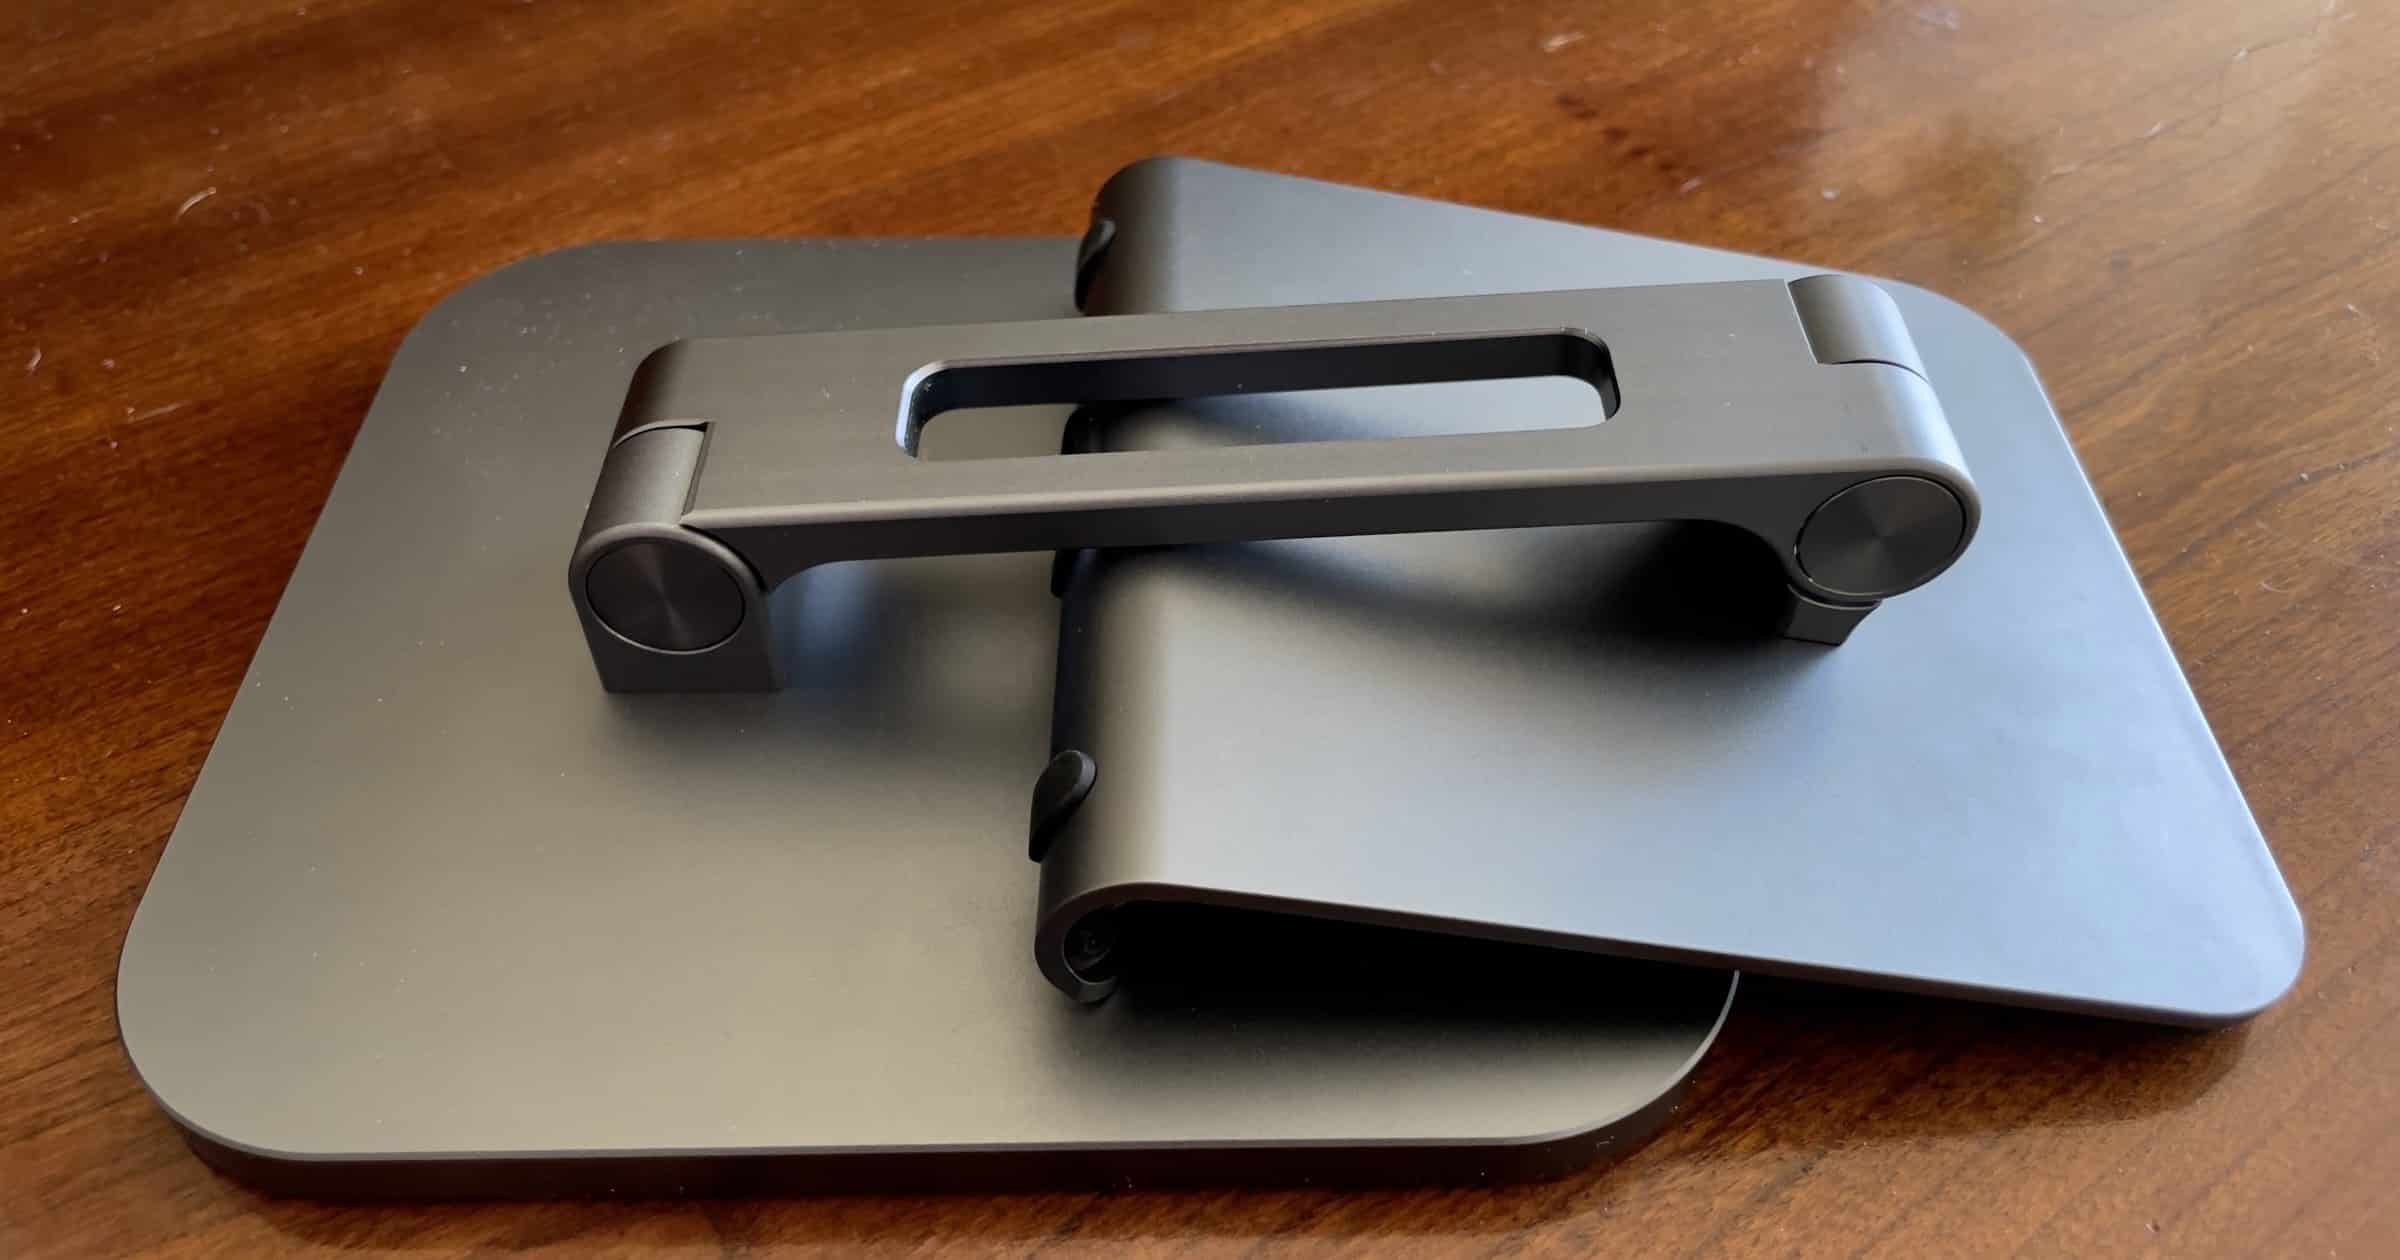 Satechi foldable iPad stand